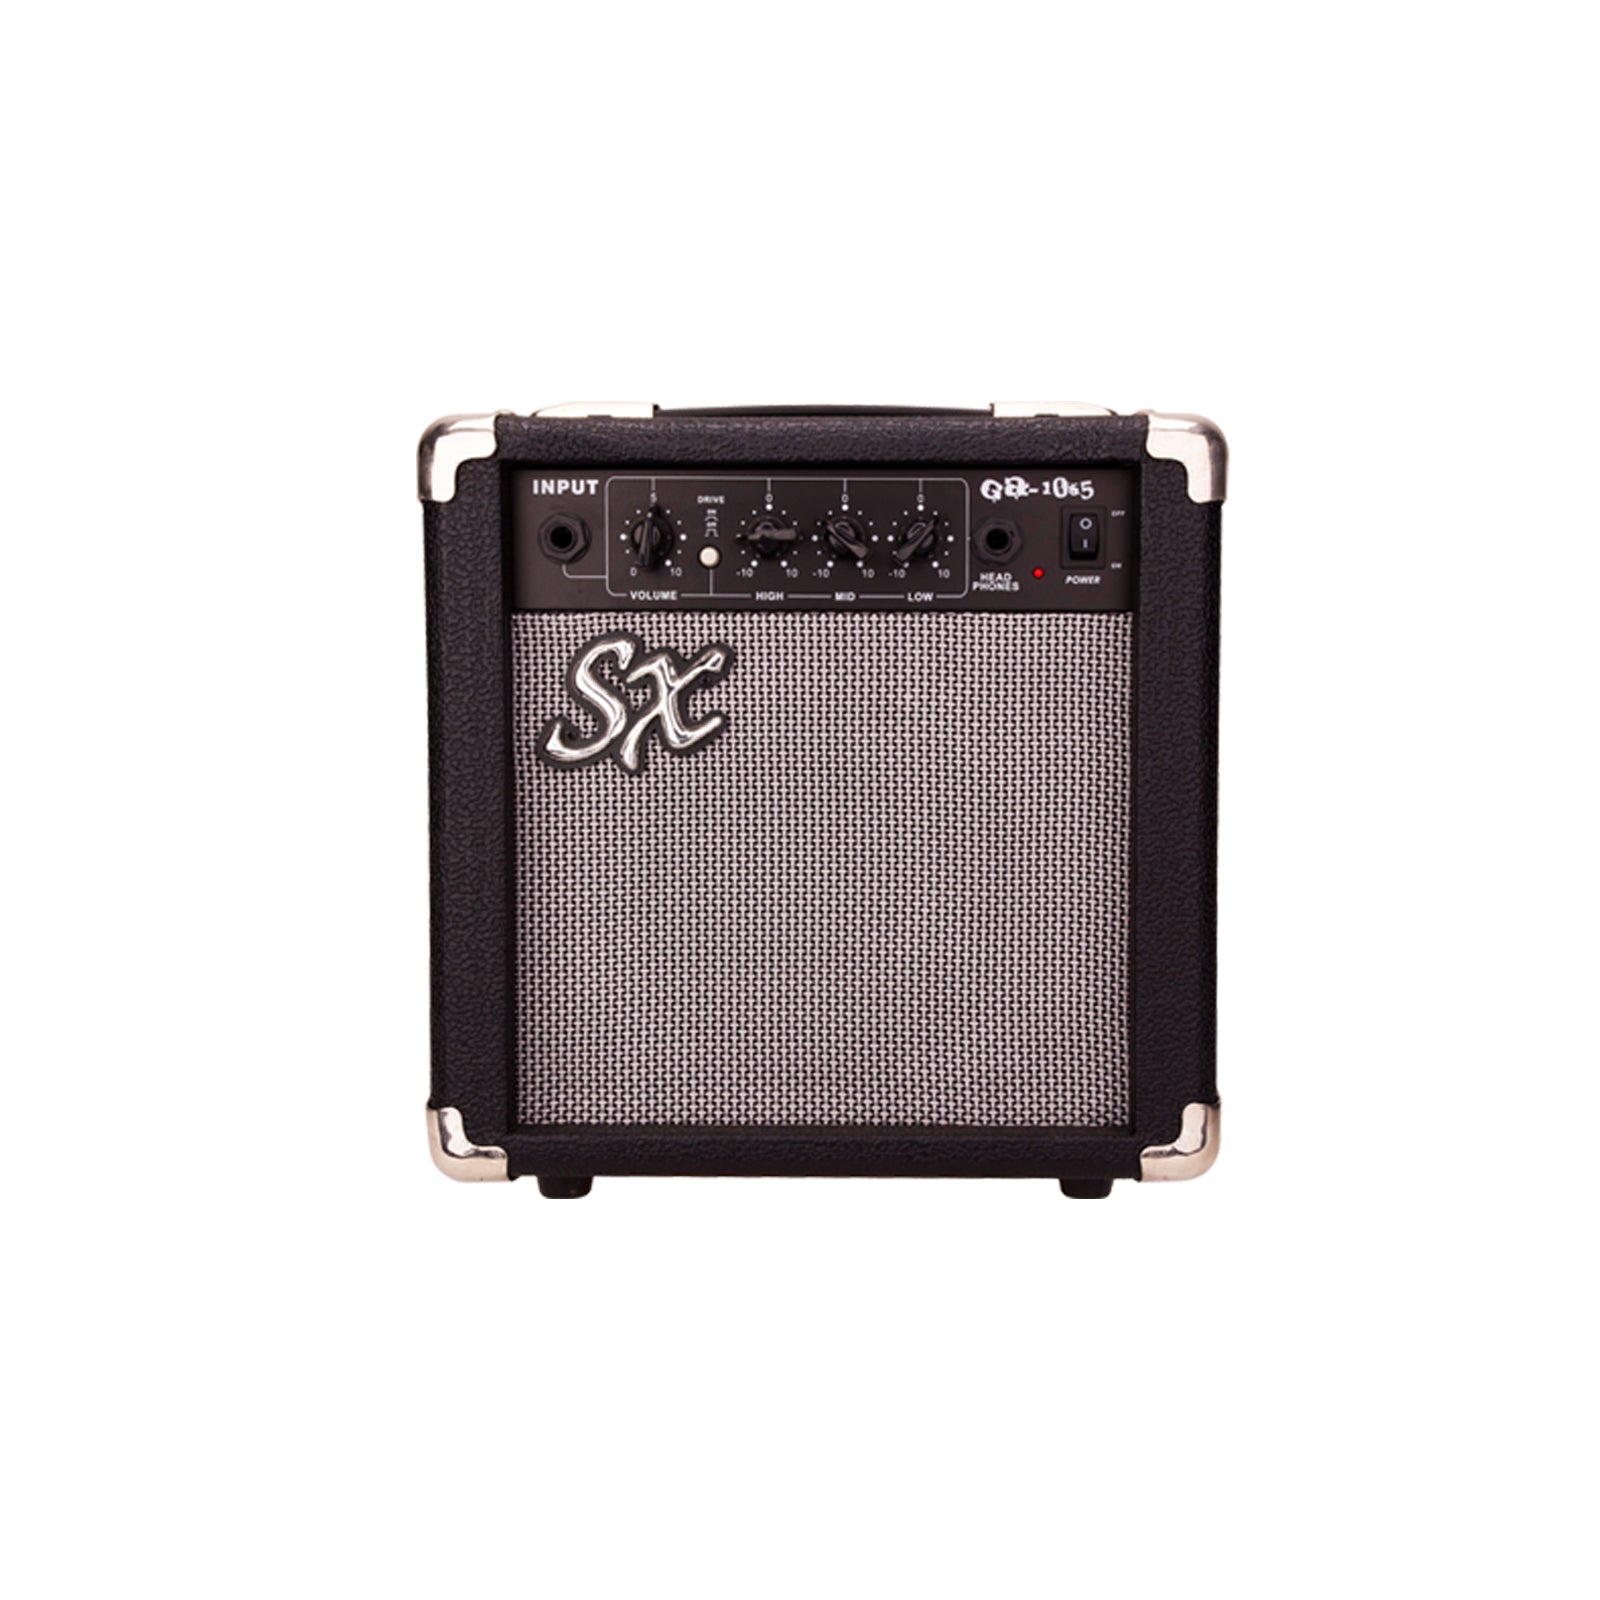 SX GA-1065 6.5" Guitar Amplifier 10 Watts